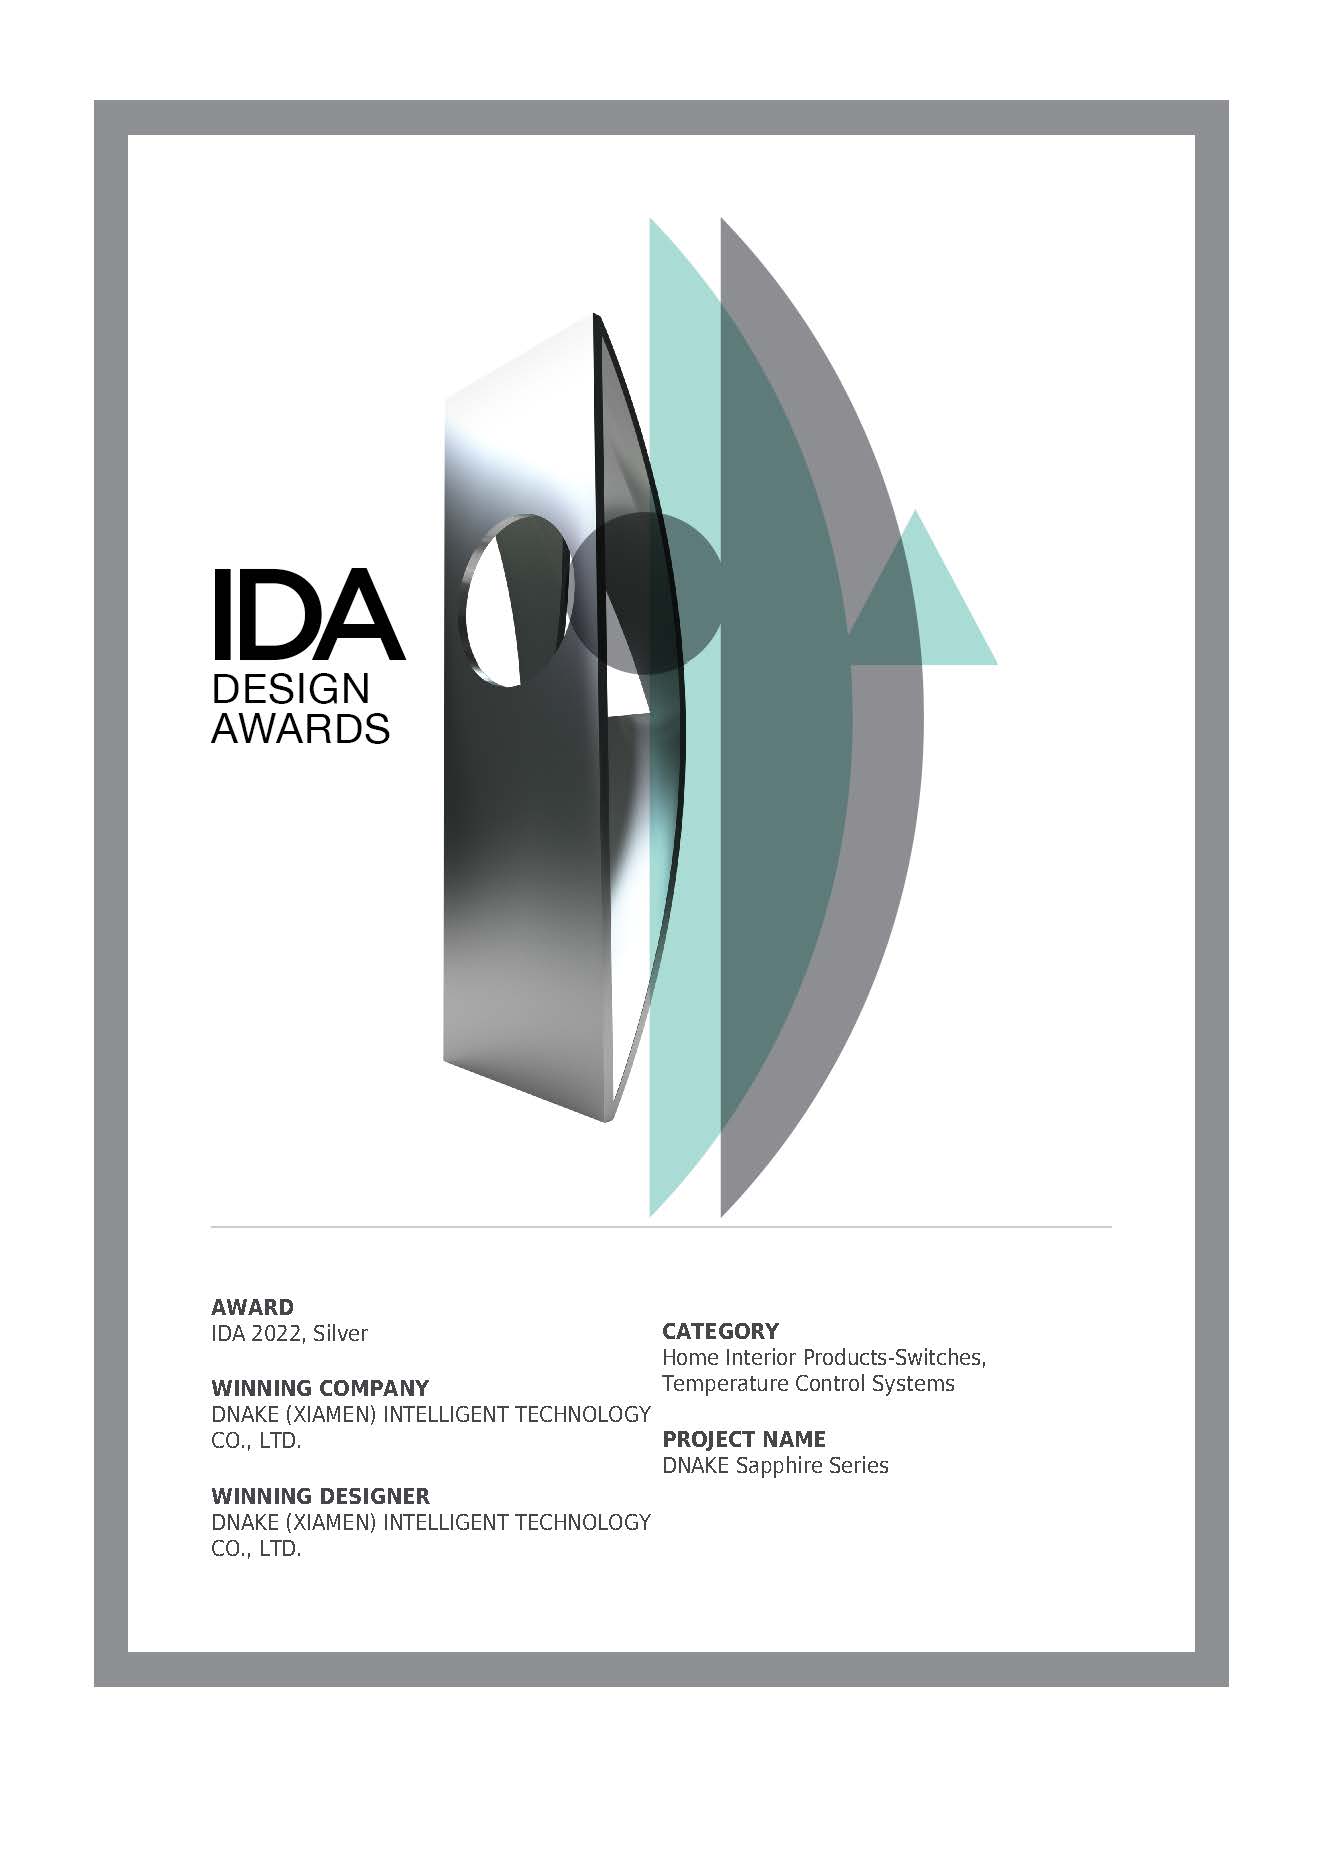 Premis de Disseny IDA